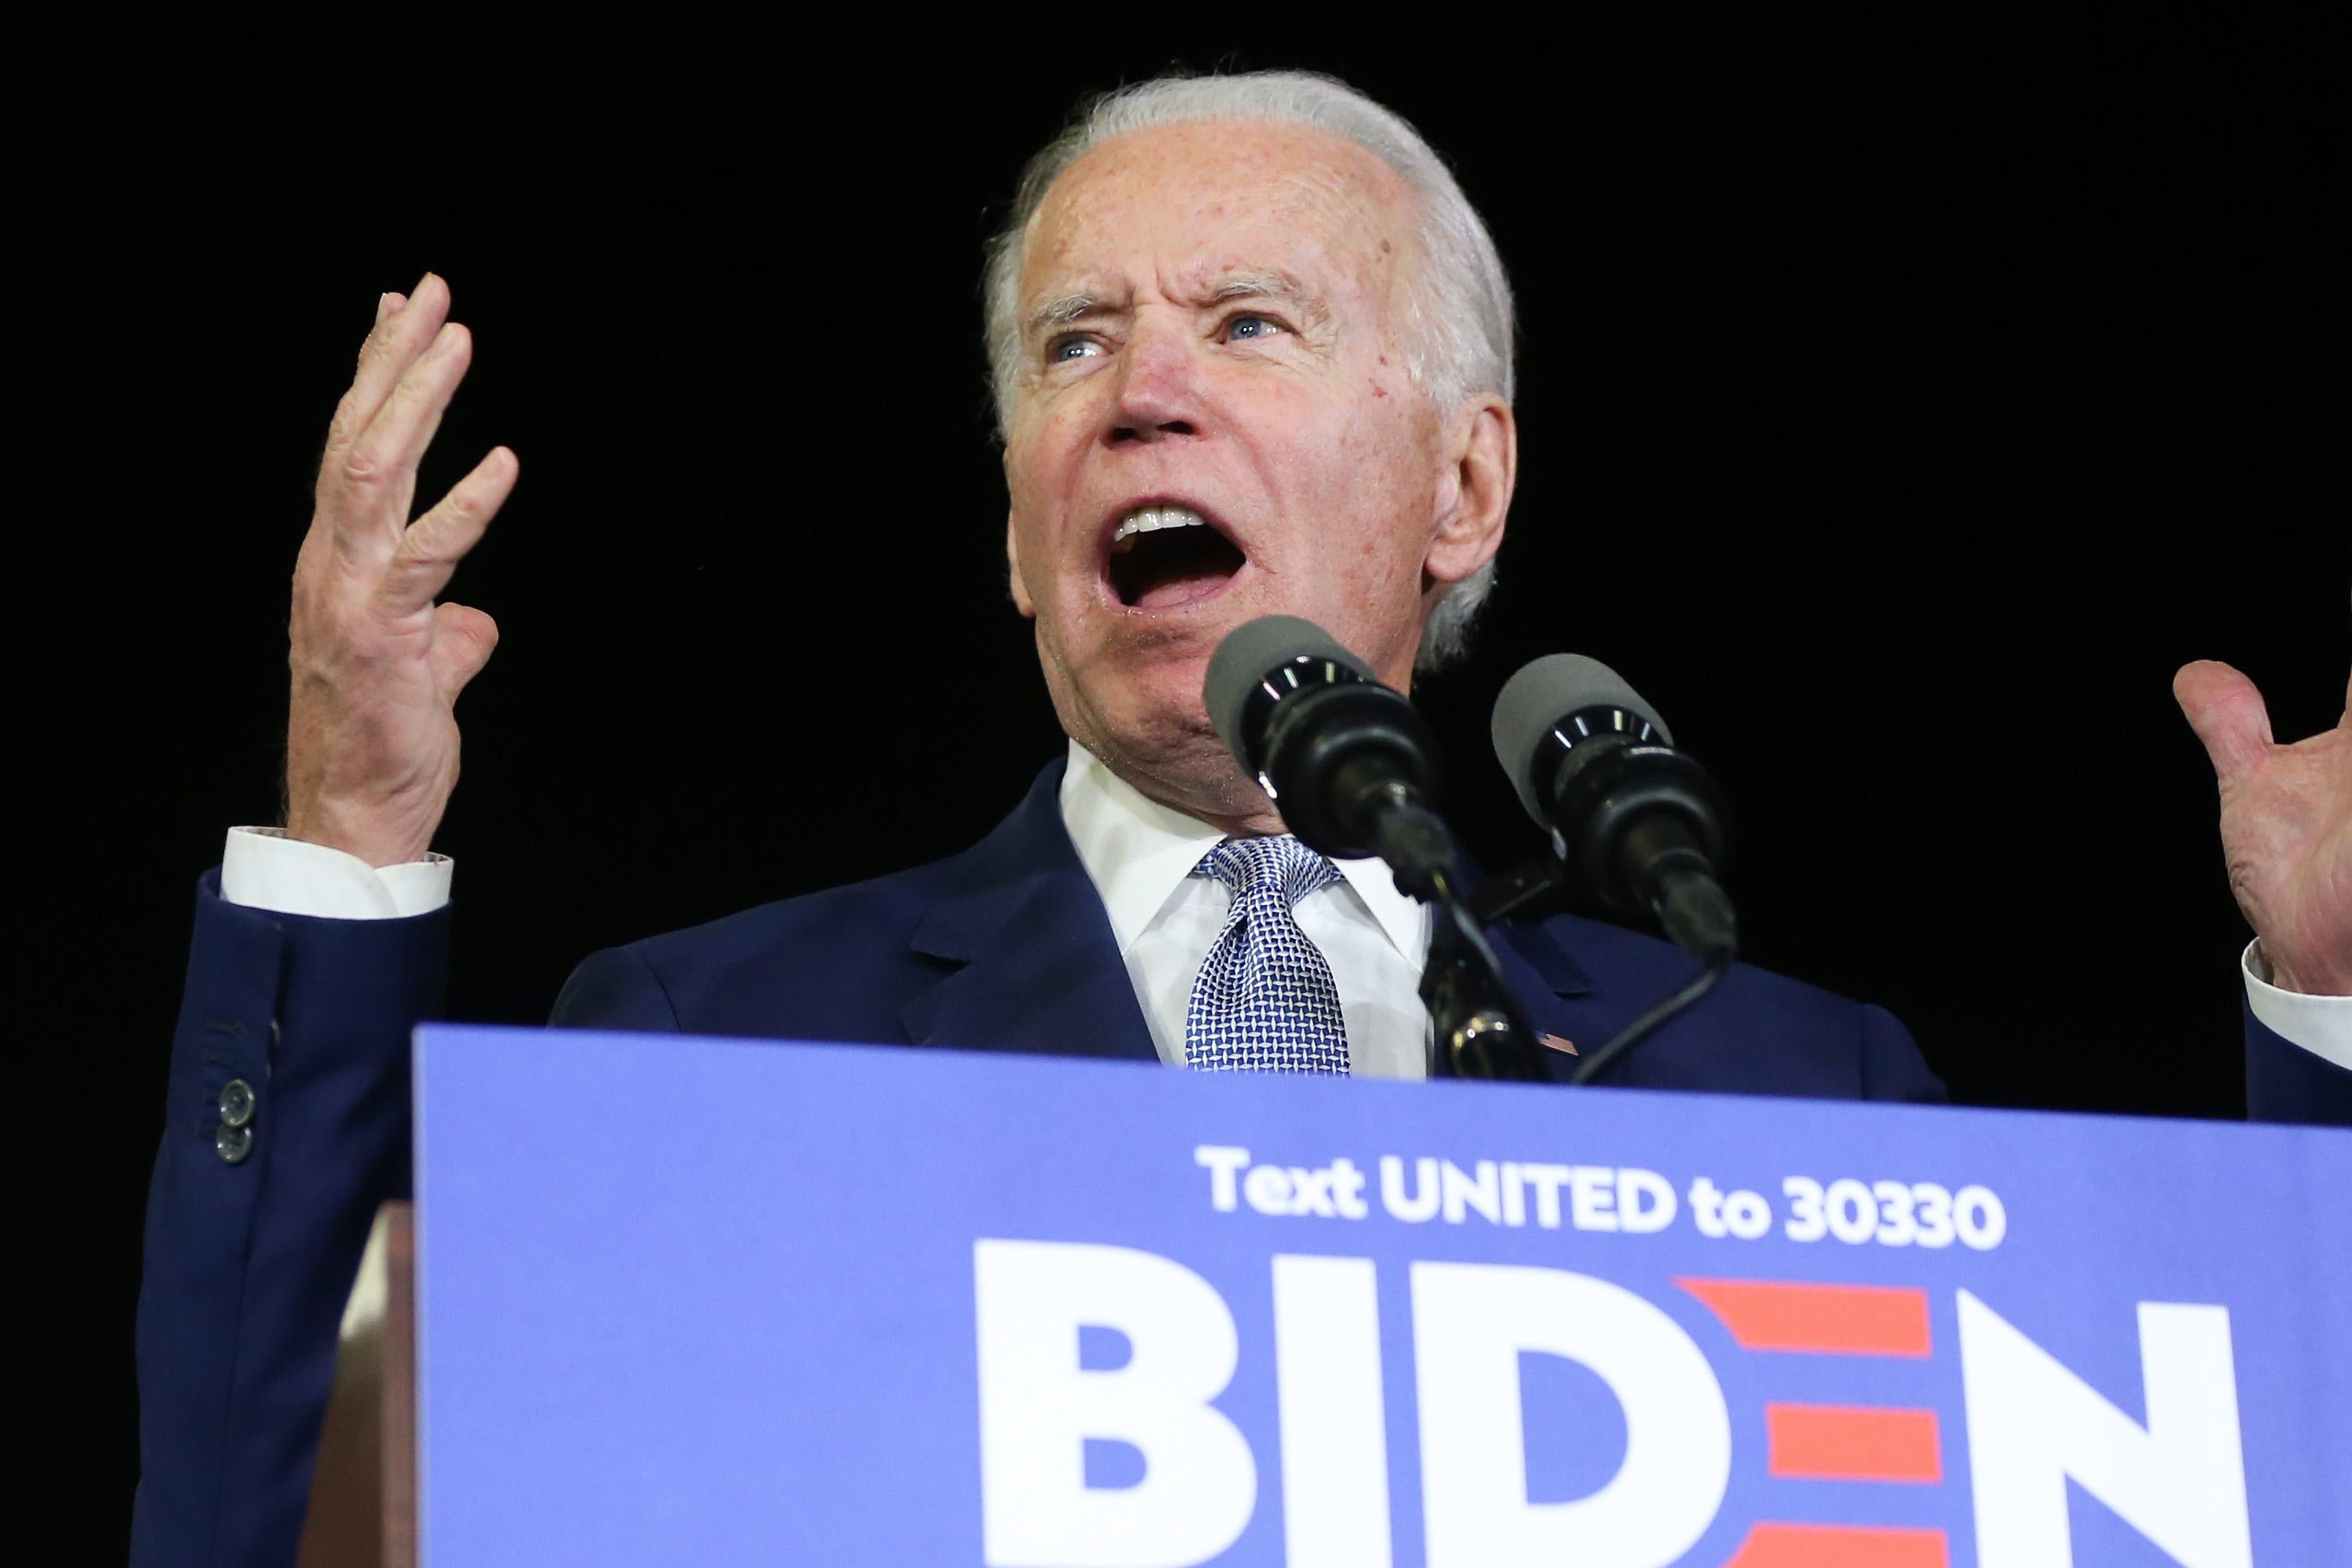 Joe Biden raises his hands while speaking at a podium.